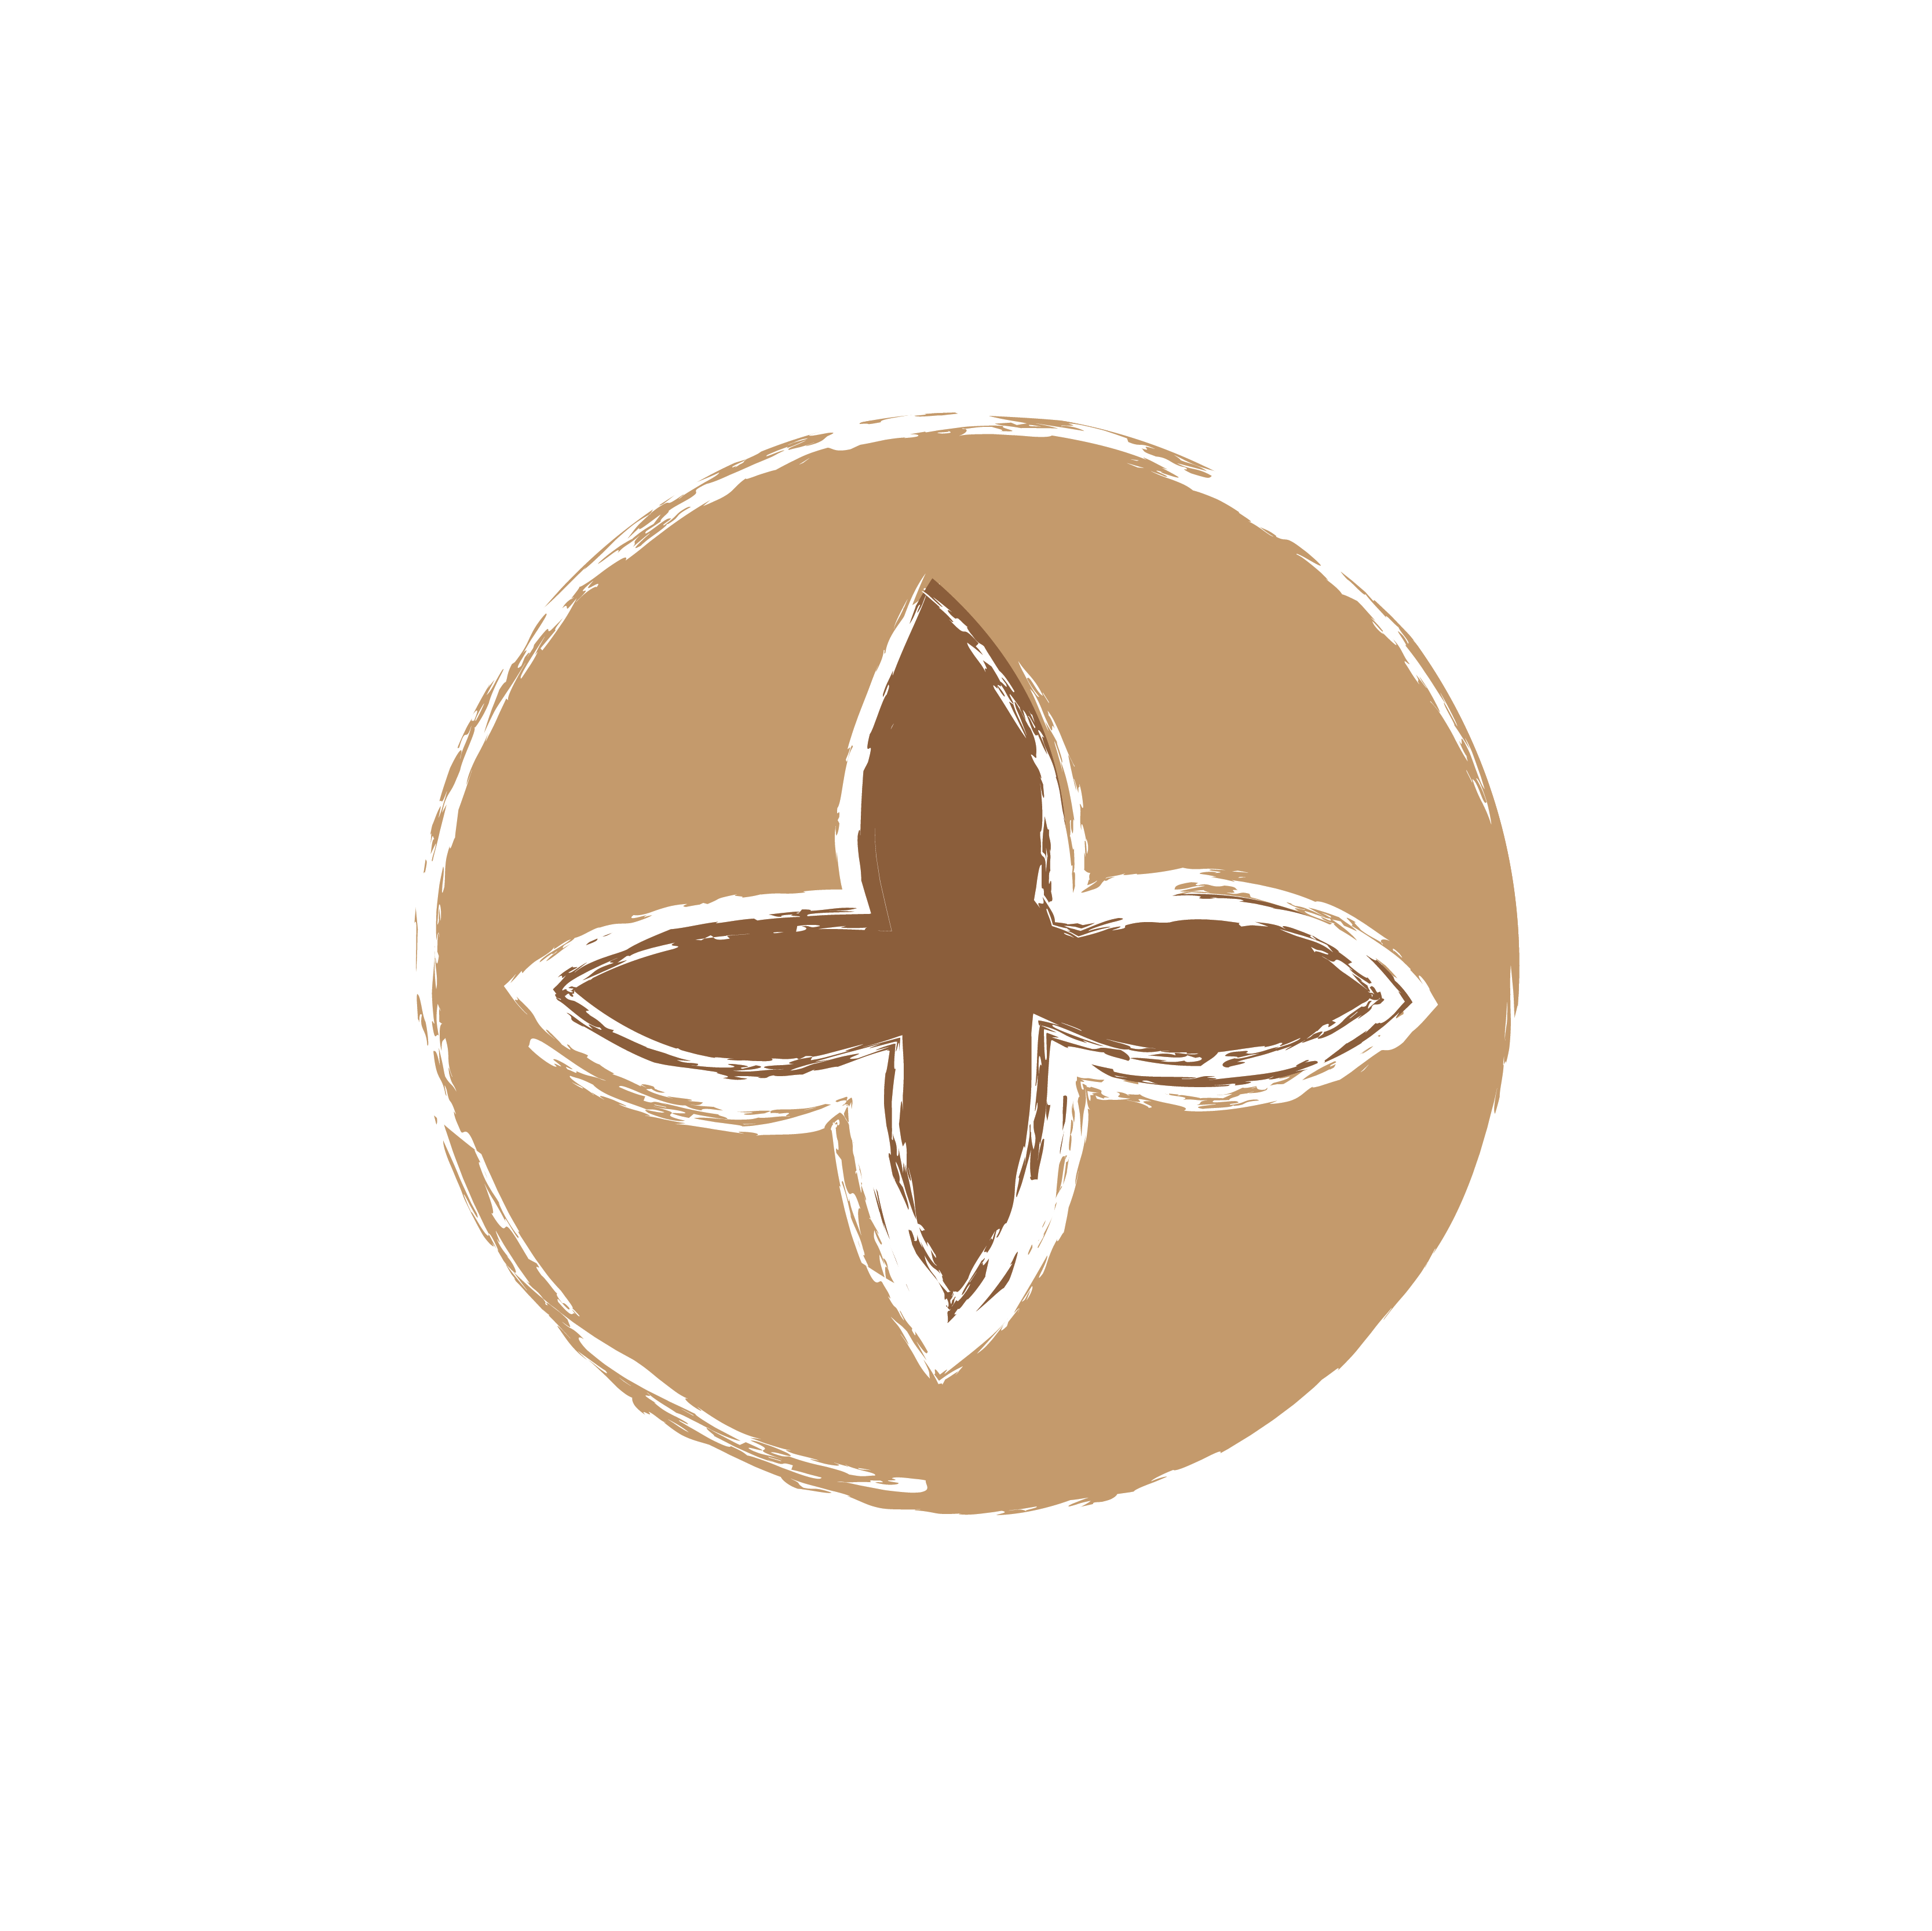 much kneaded sourdough